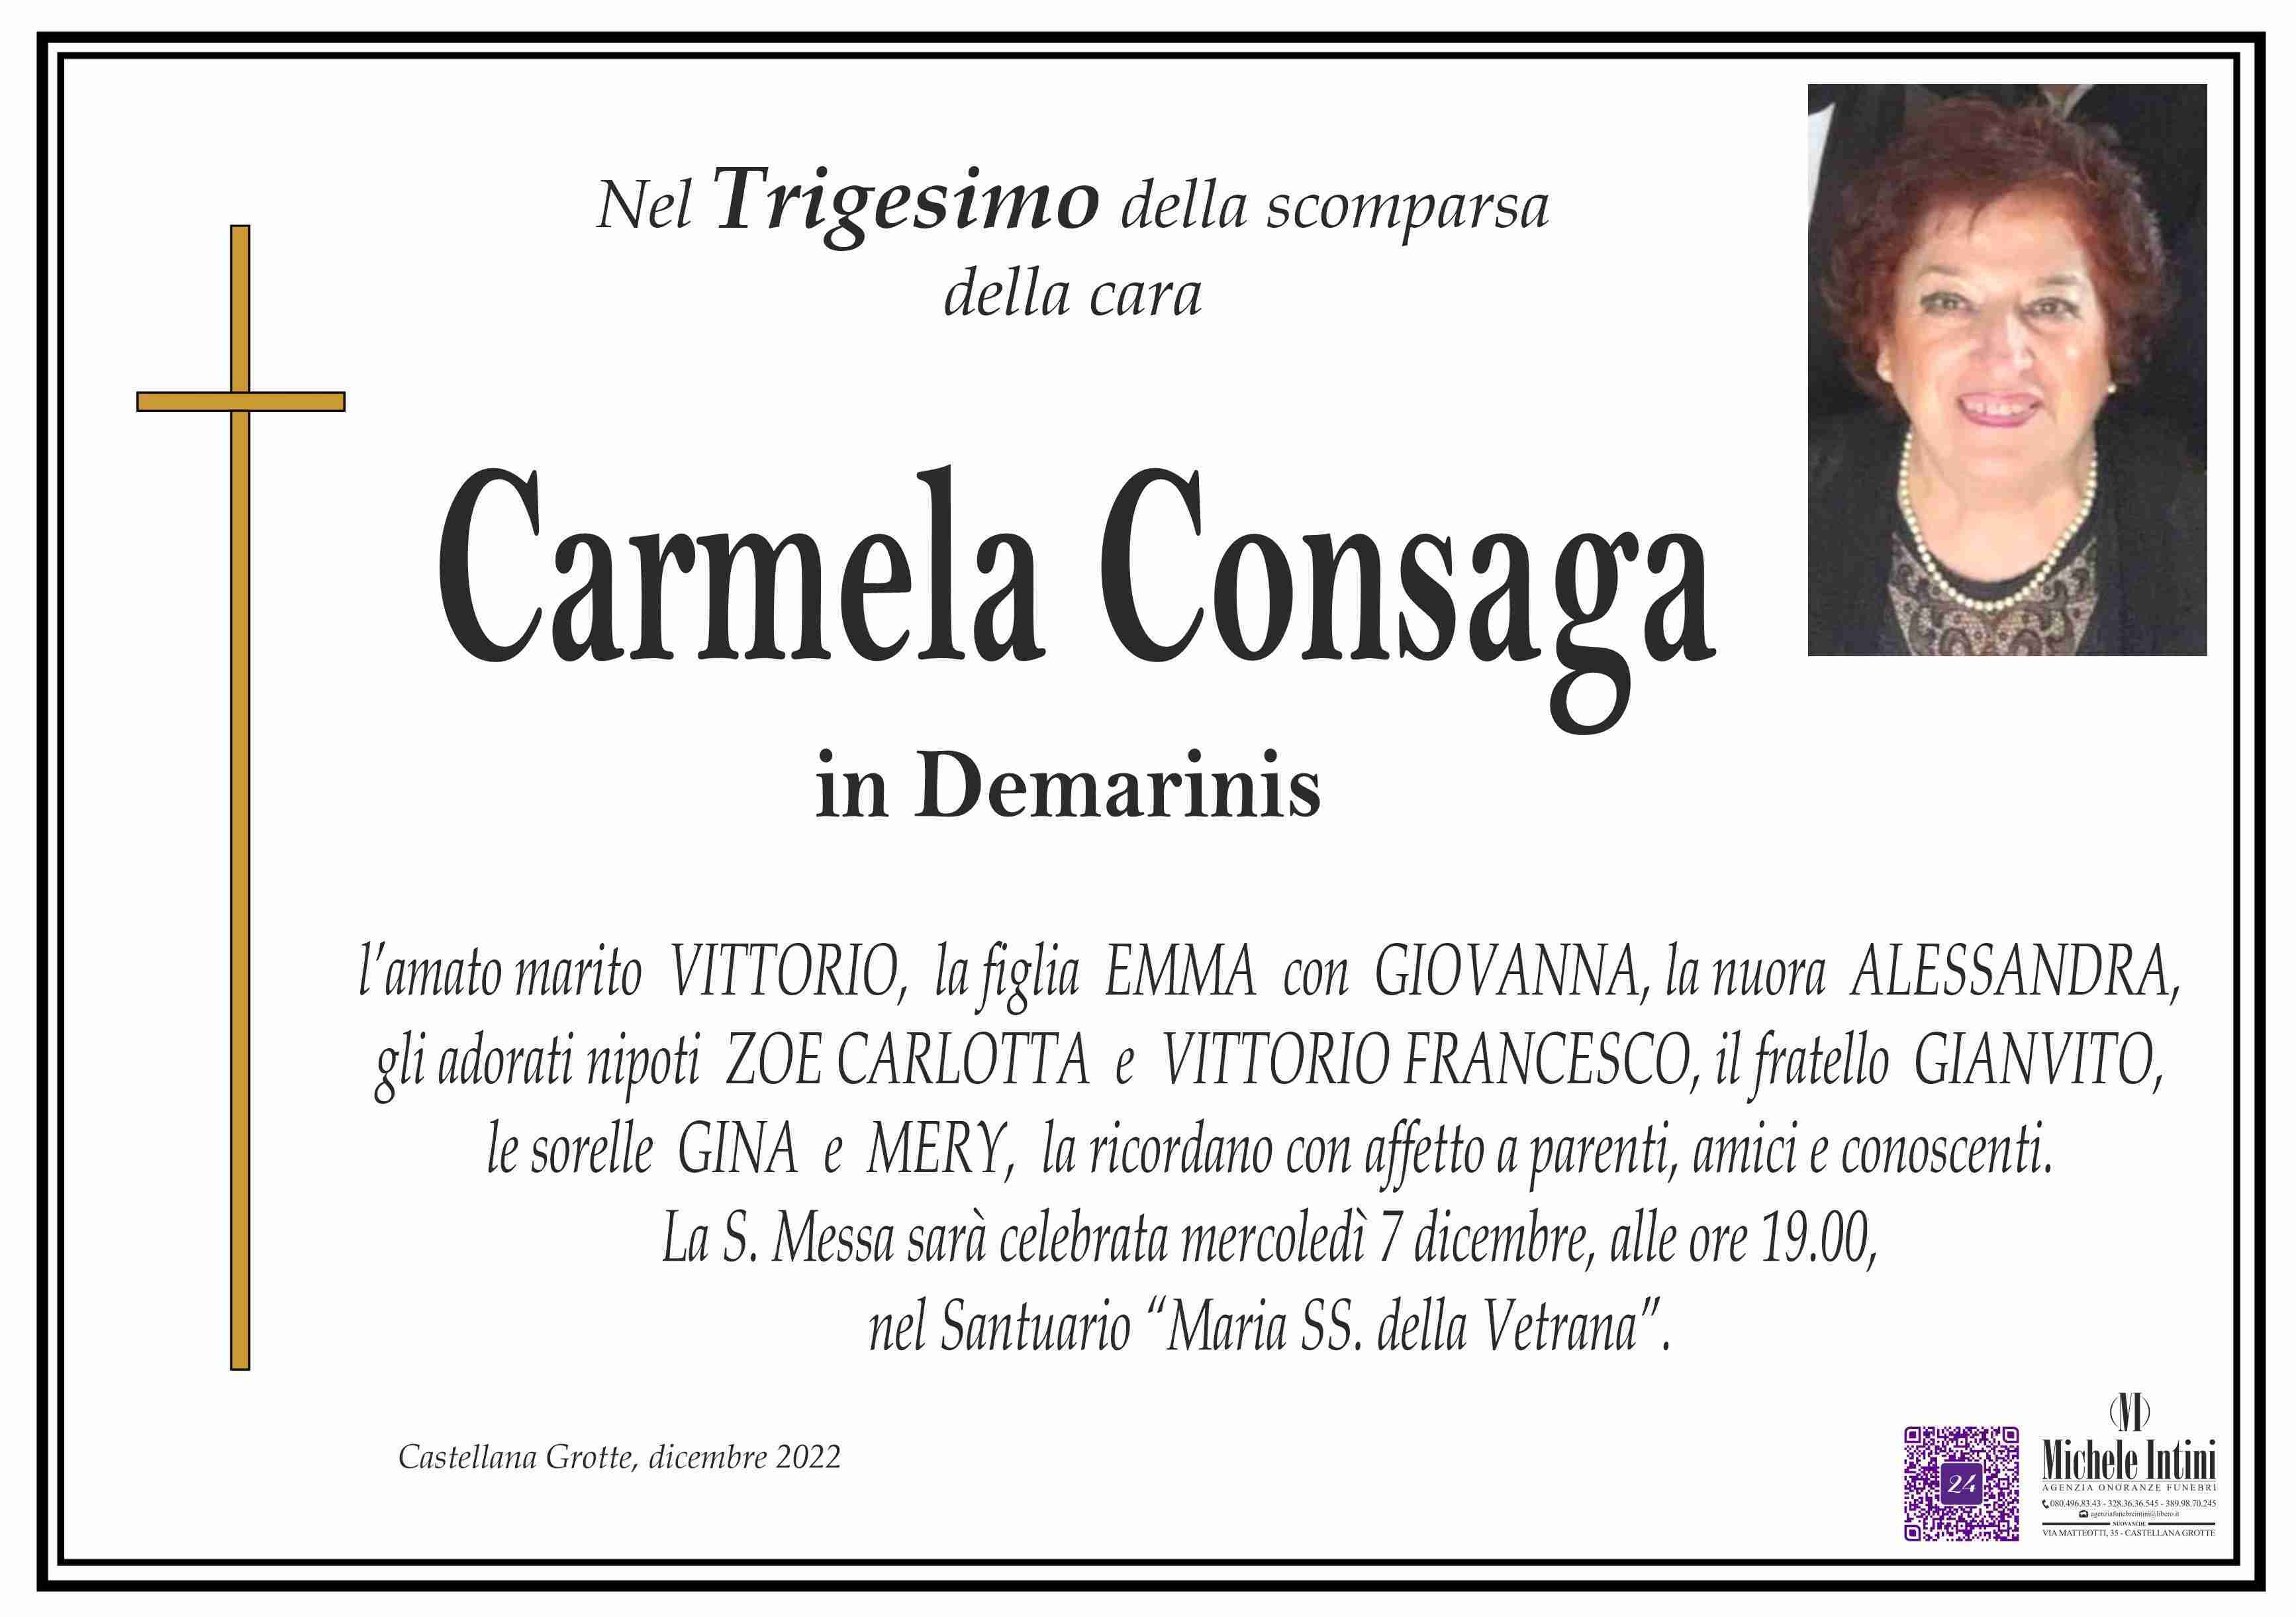 Carmela Consaga